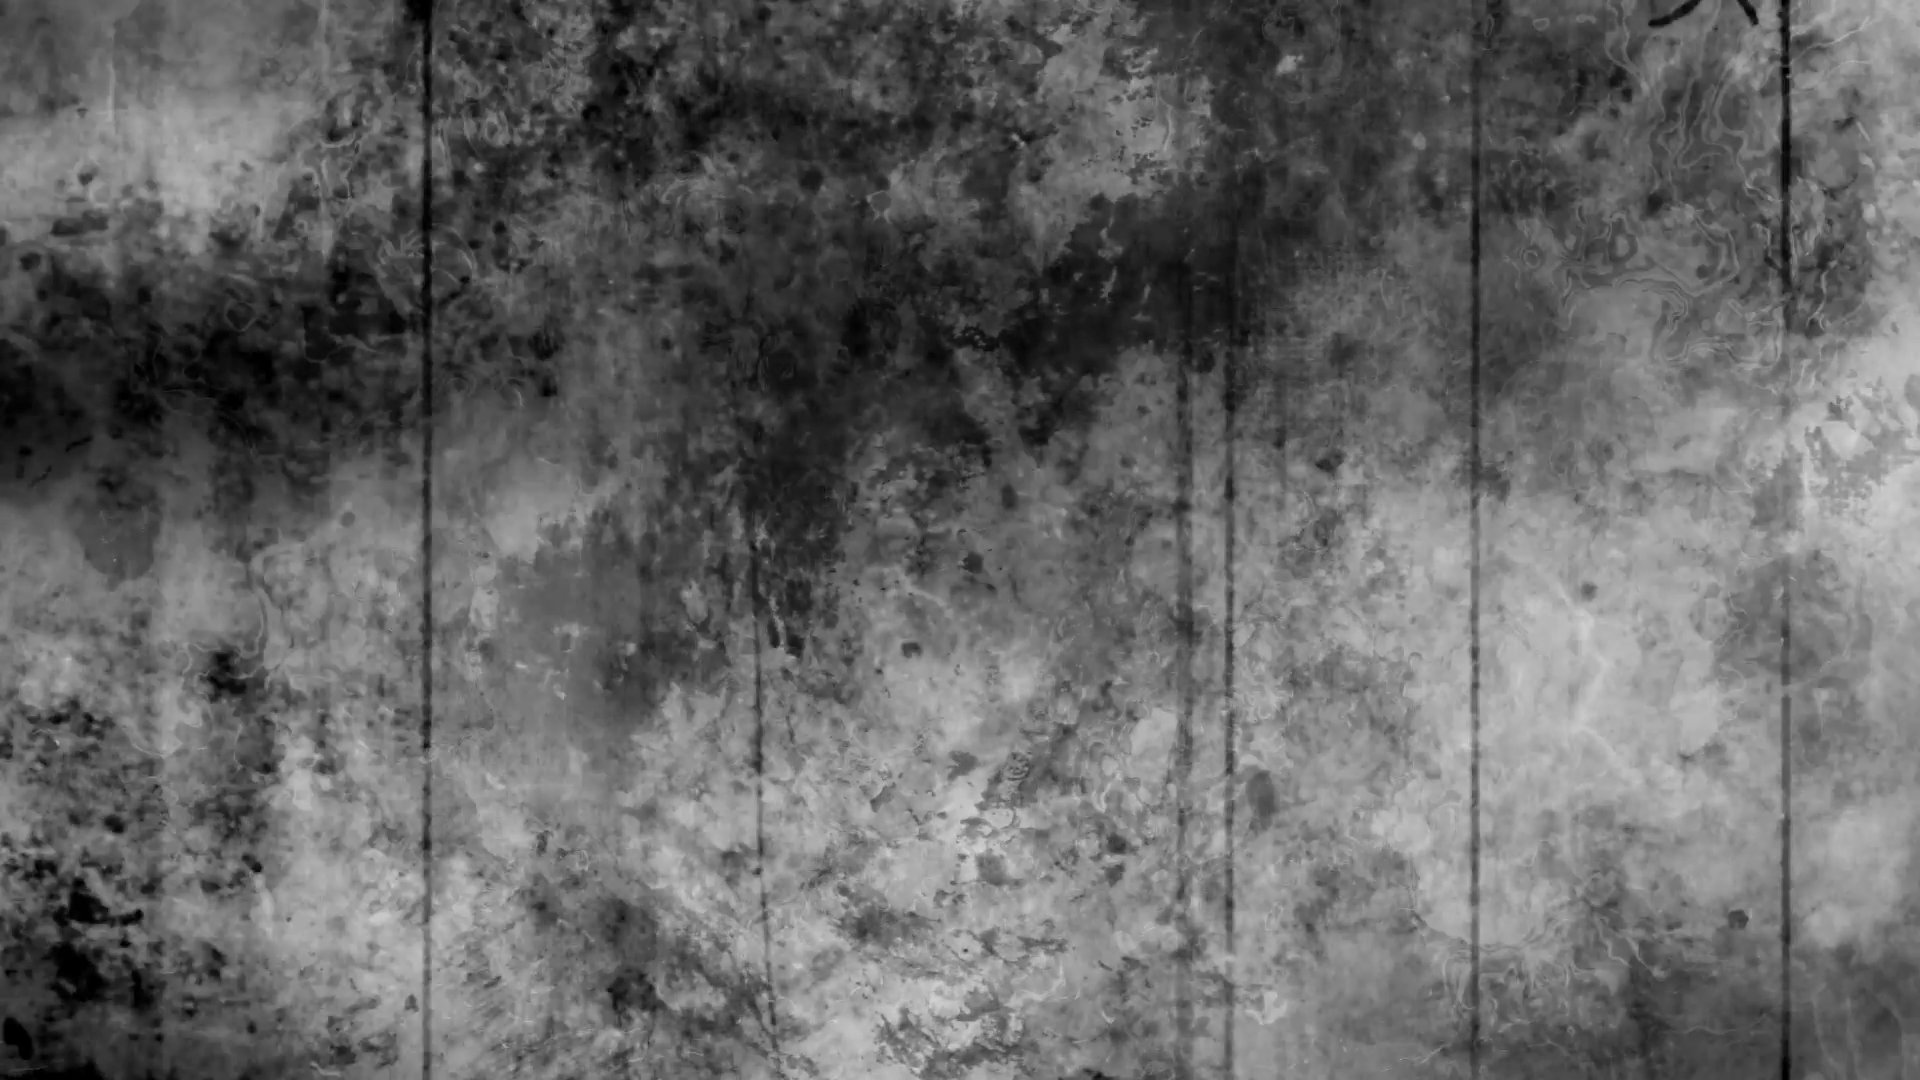 Black and White Creepy Grunge Motion Background